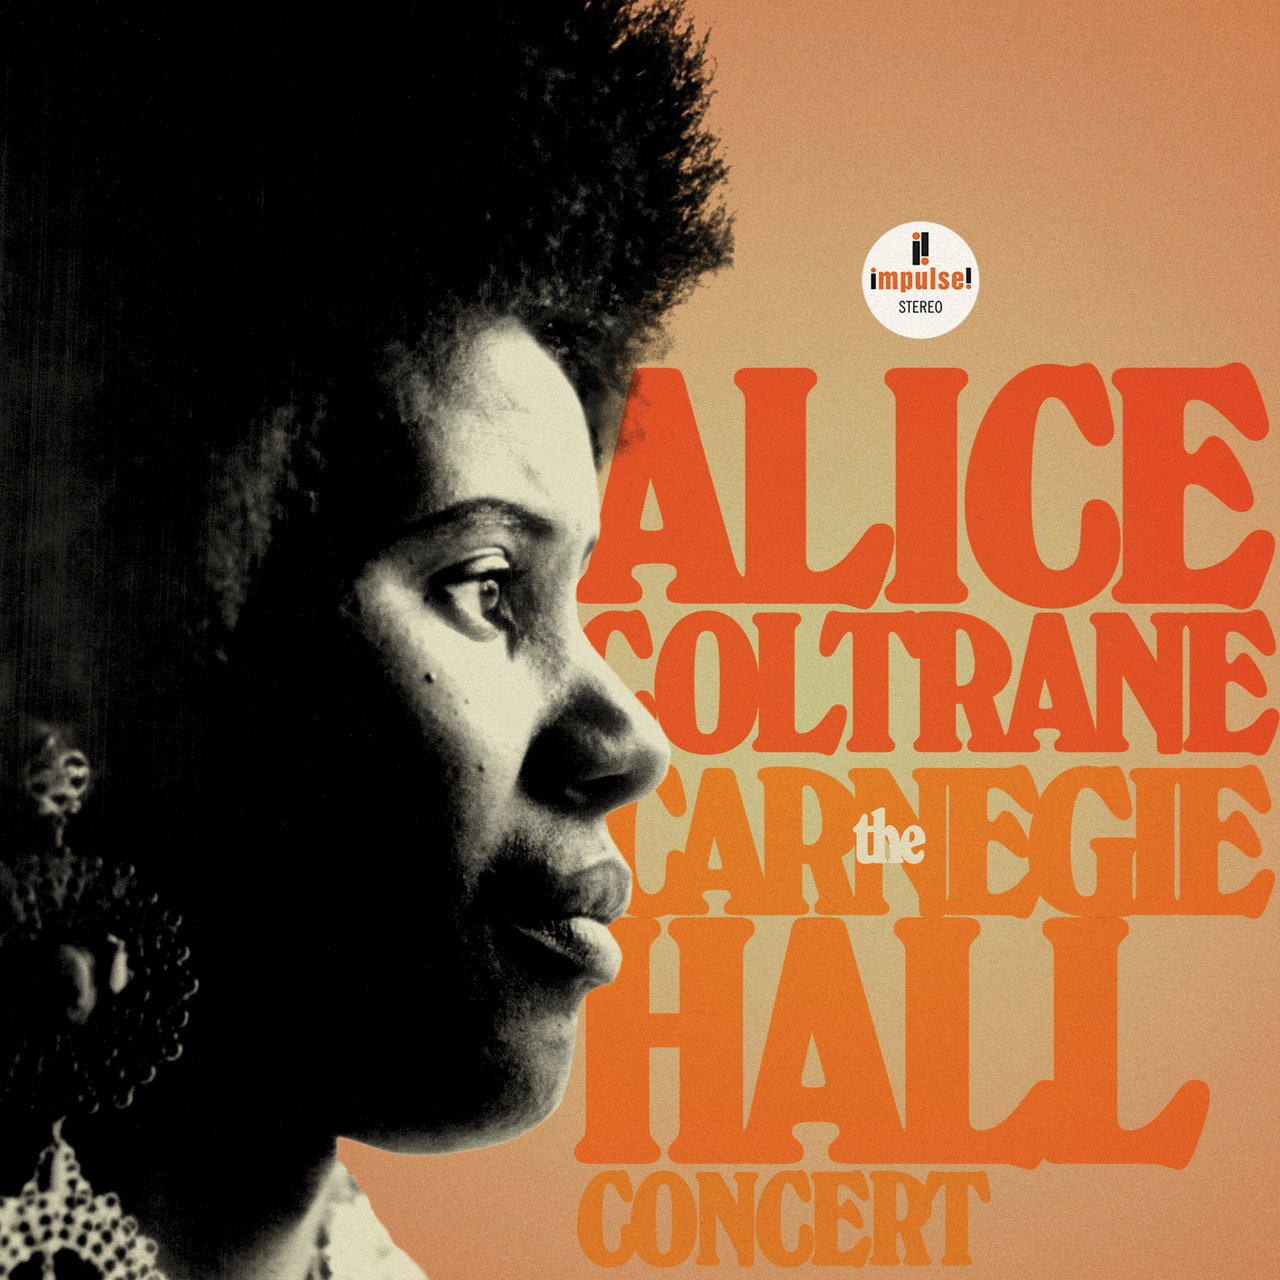 Alice-Coltrane-Carnegie-Hall.jpg